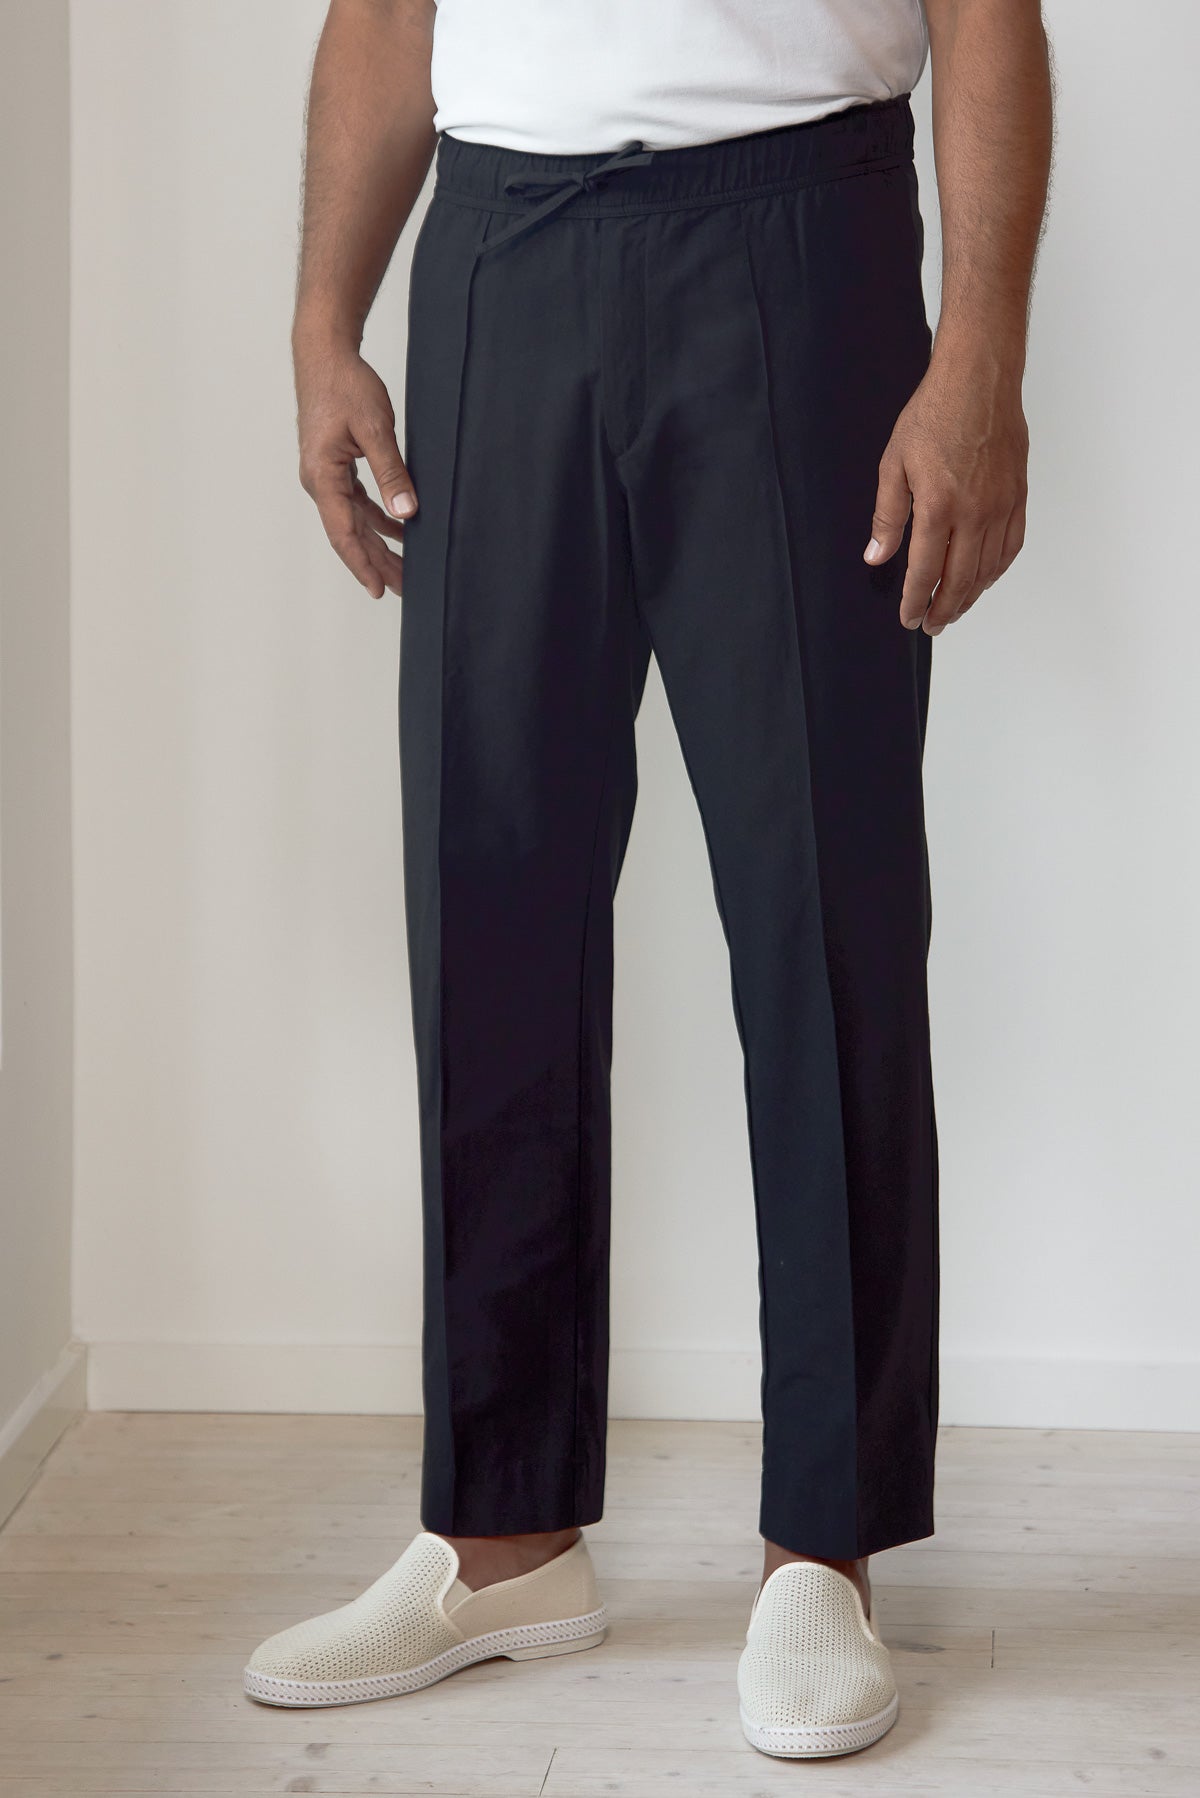 MAX trousers black tencel